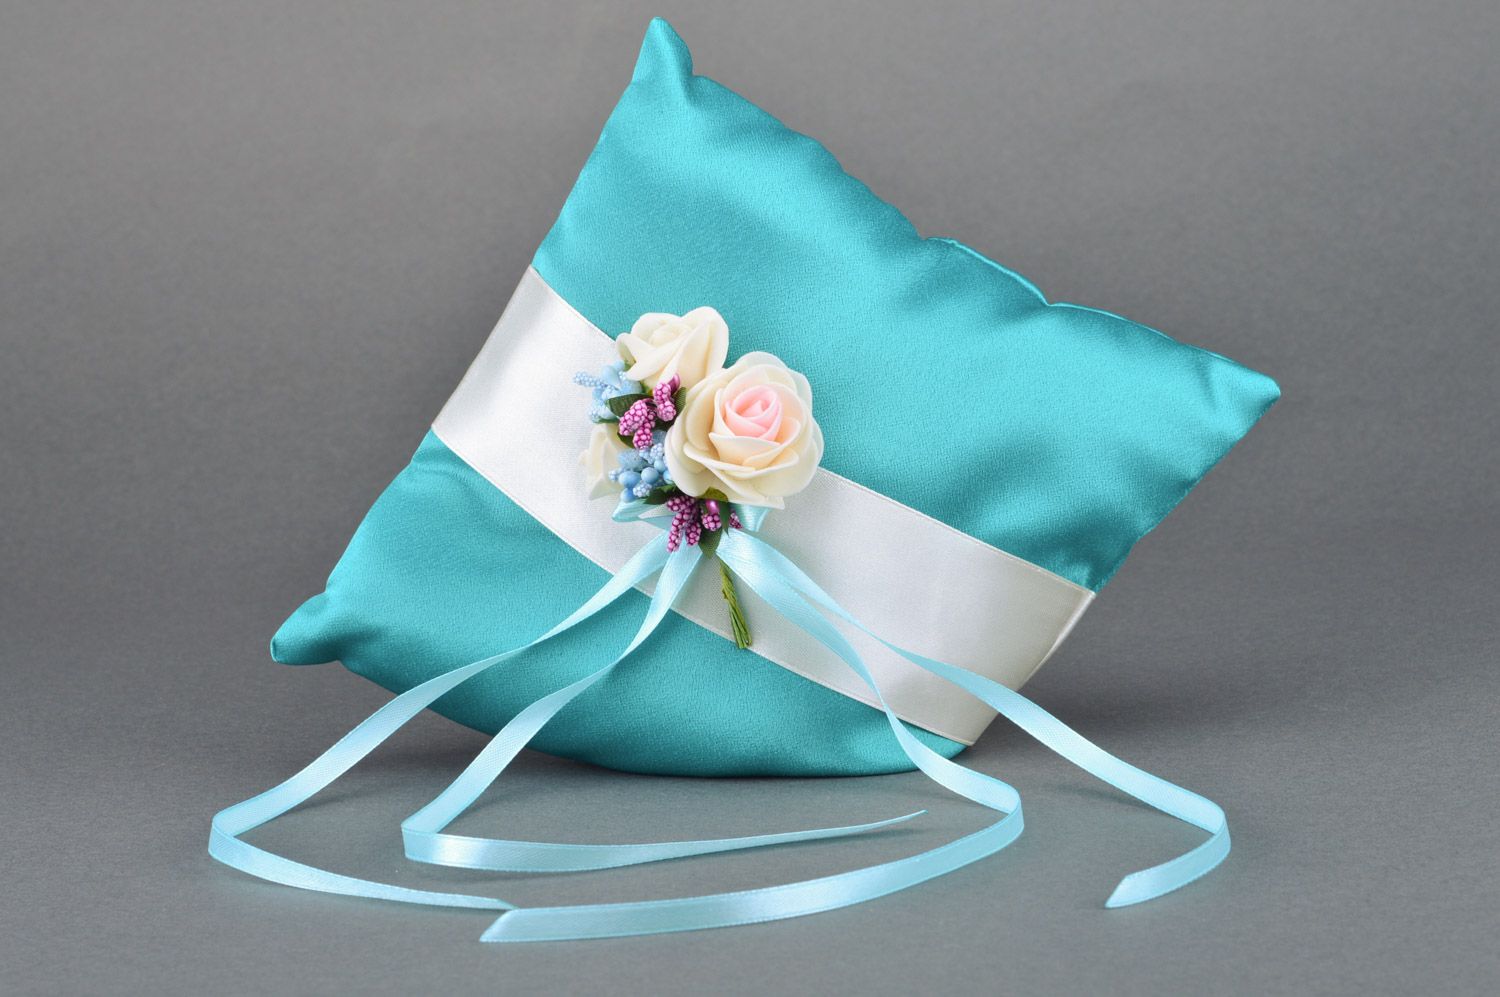 Handmade wedding rings bearer pillow sewn of blue satin with tender flowers  photo 2